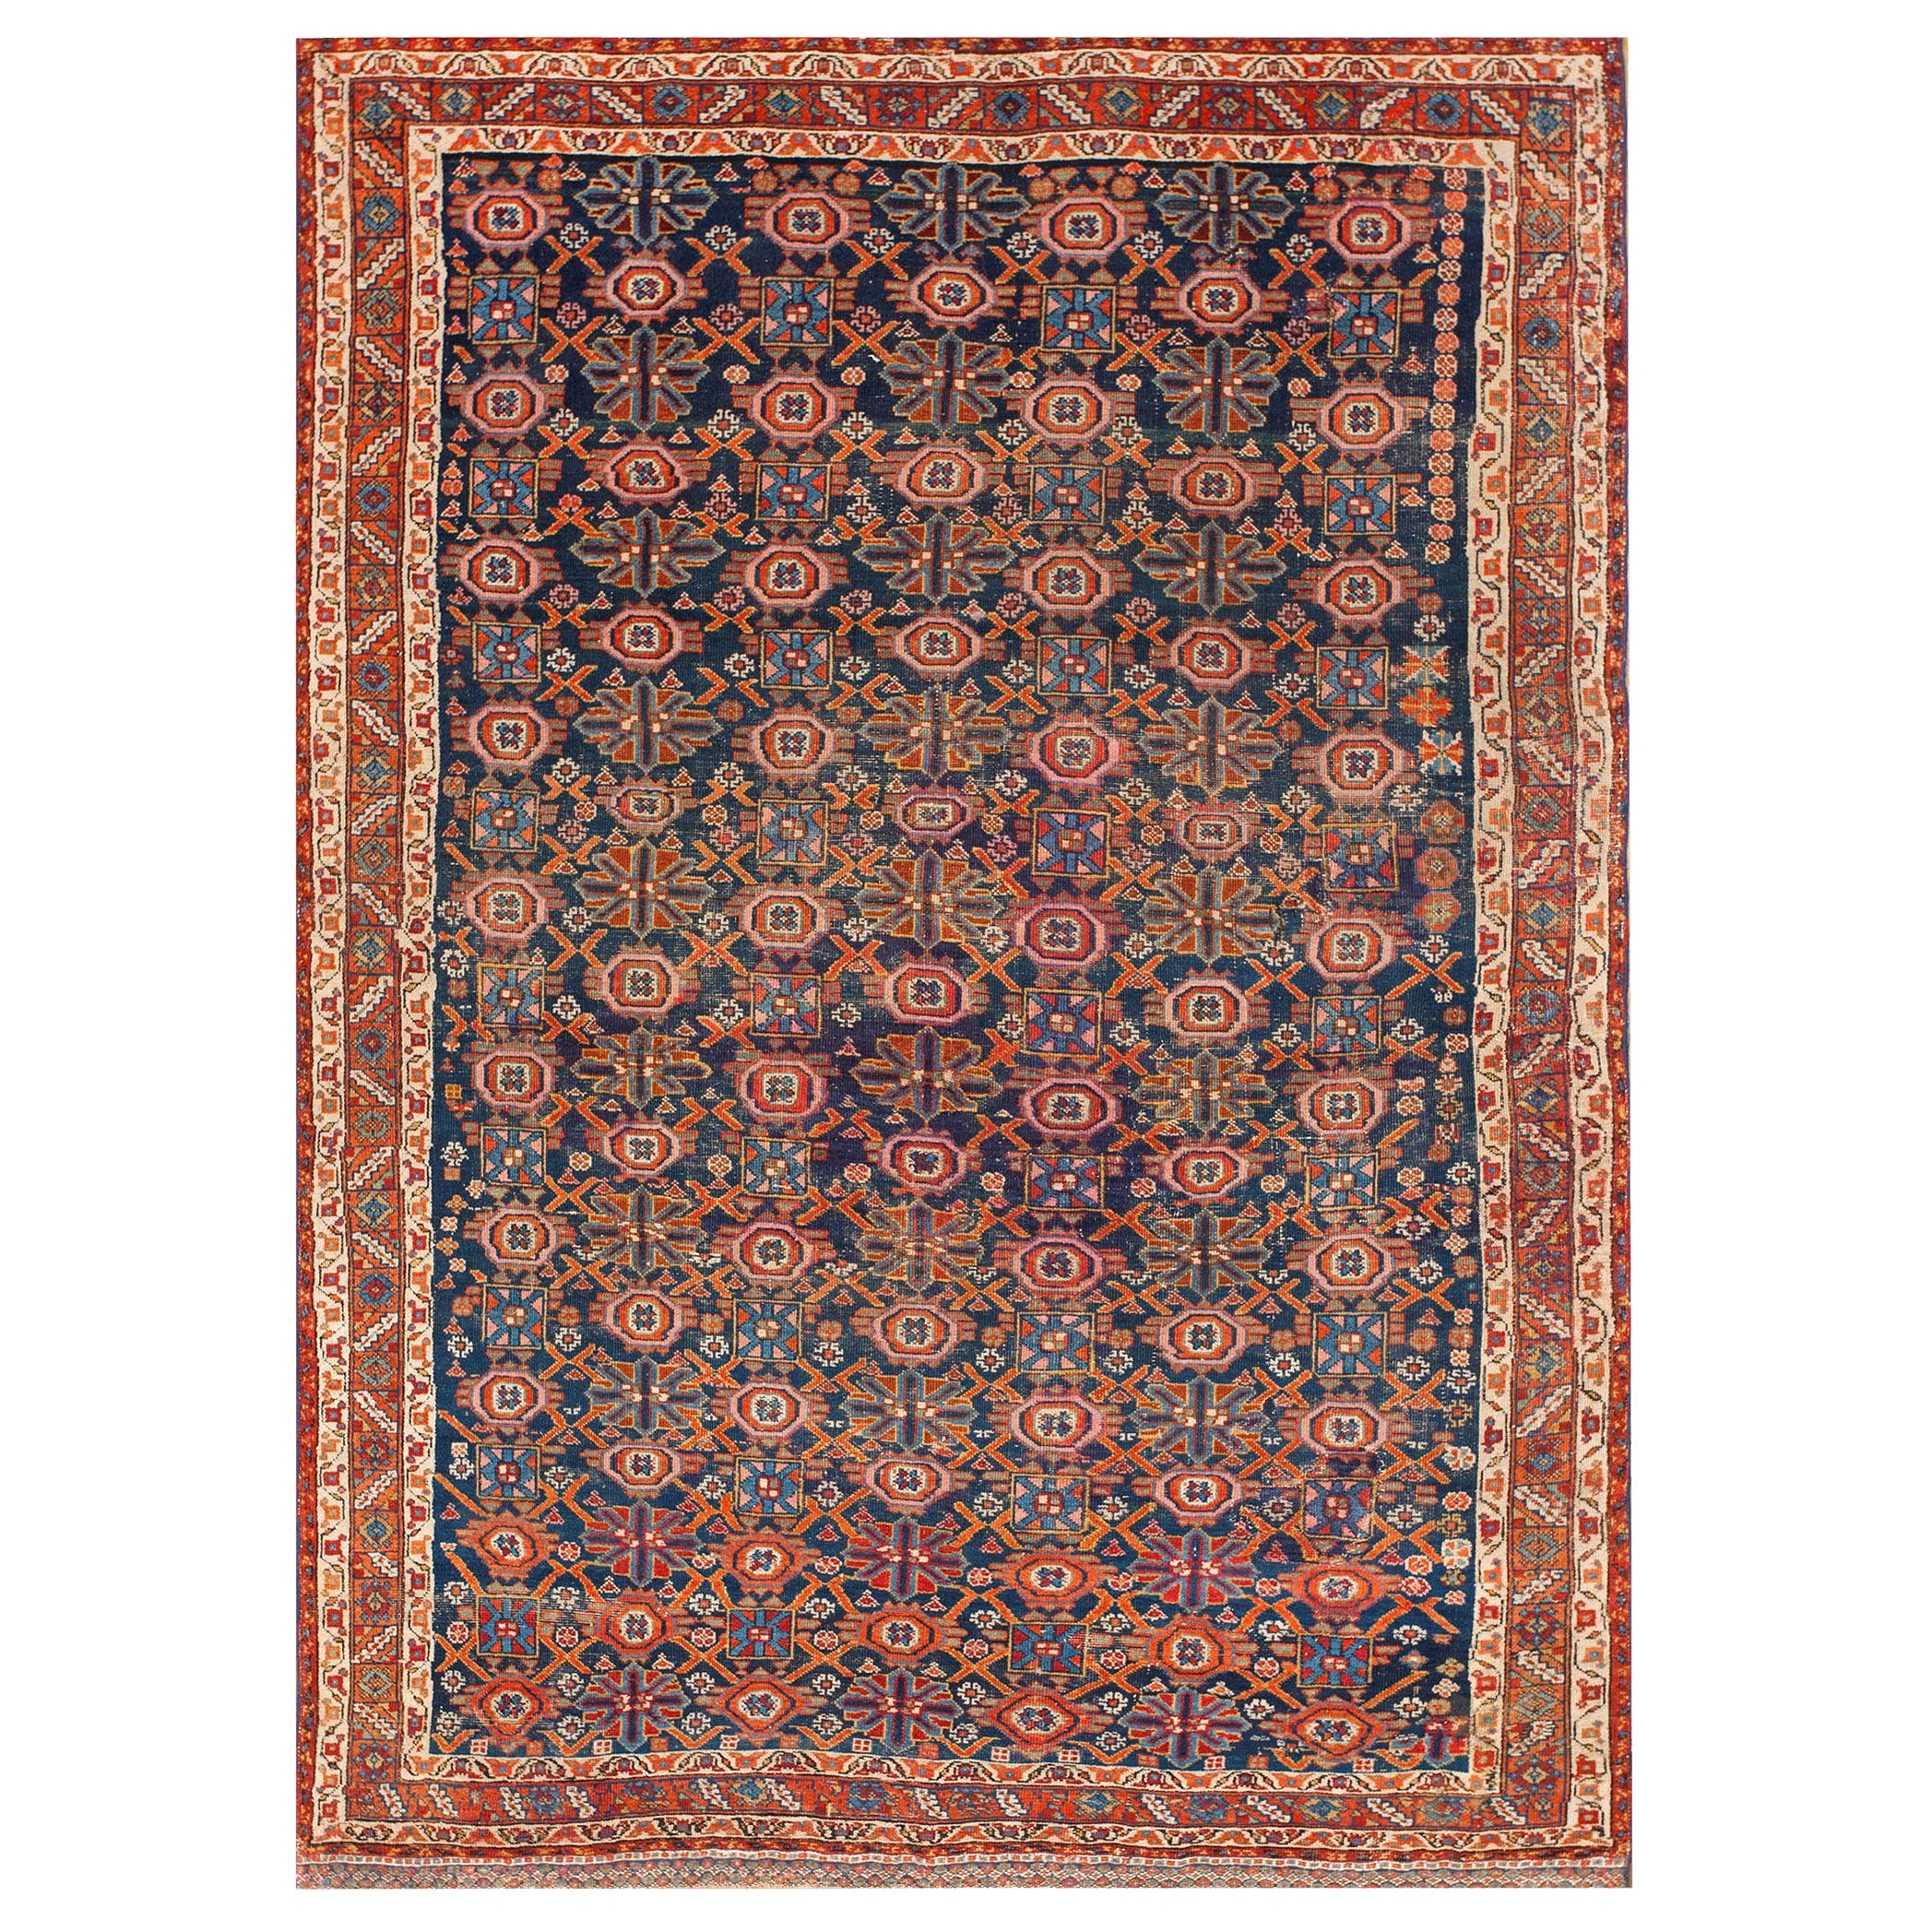 Late 19th Century S.E. Persian Afshar Carpet ( 4'6" x 6' - 137 x 183 )